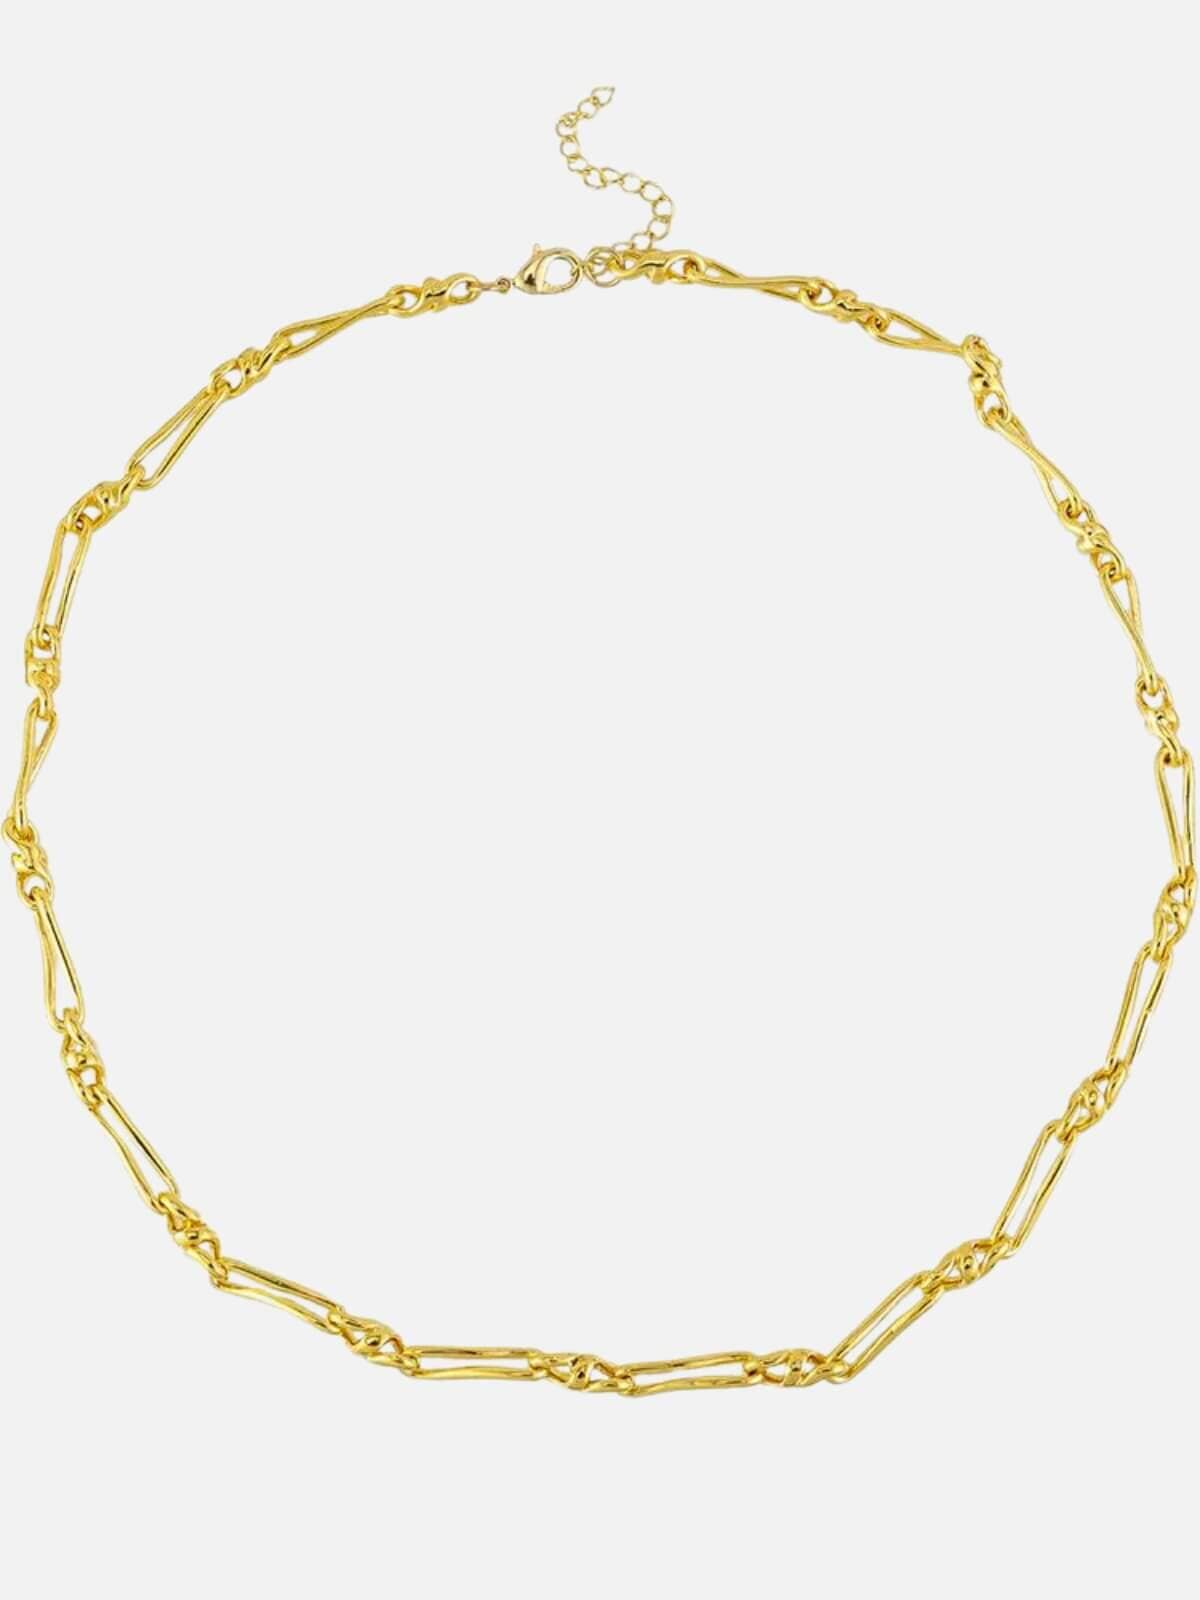 Jolie & Deen | Cecile Chain Necklace - Gold | PerluJolie & Deen | Cecile Chain Necklace - Gold | Perlu